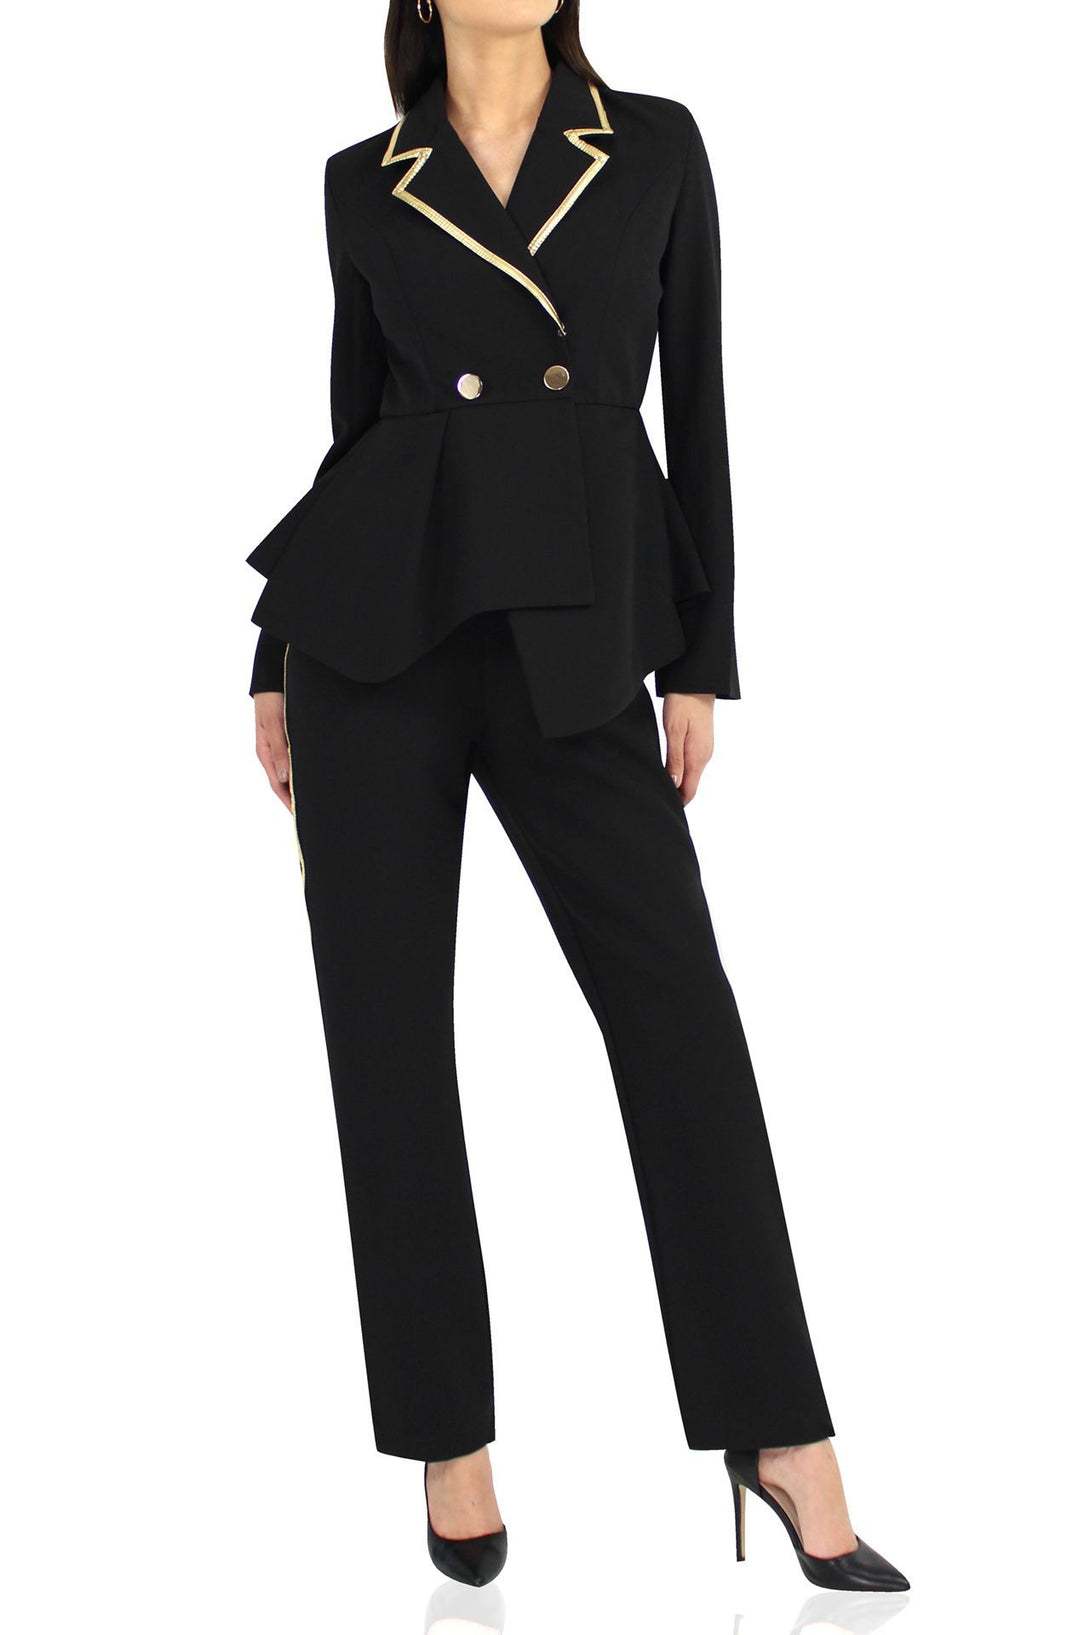 Women-Designer-Black-Matching-Suit-By-Kyle